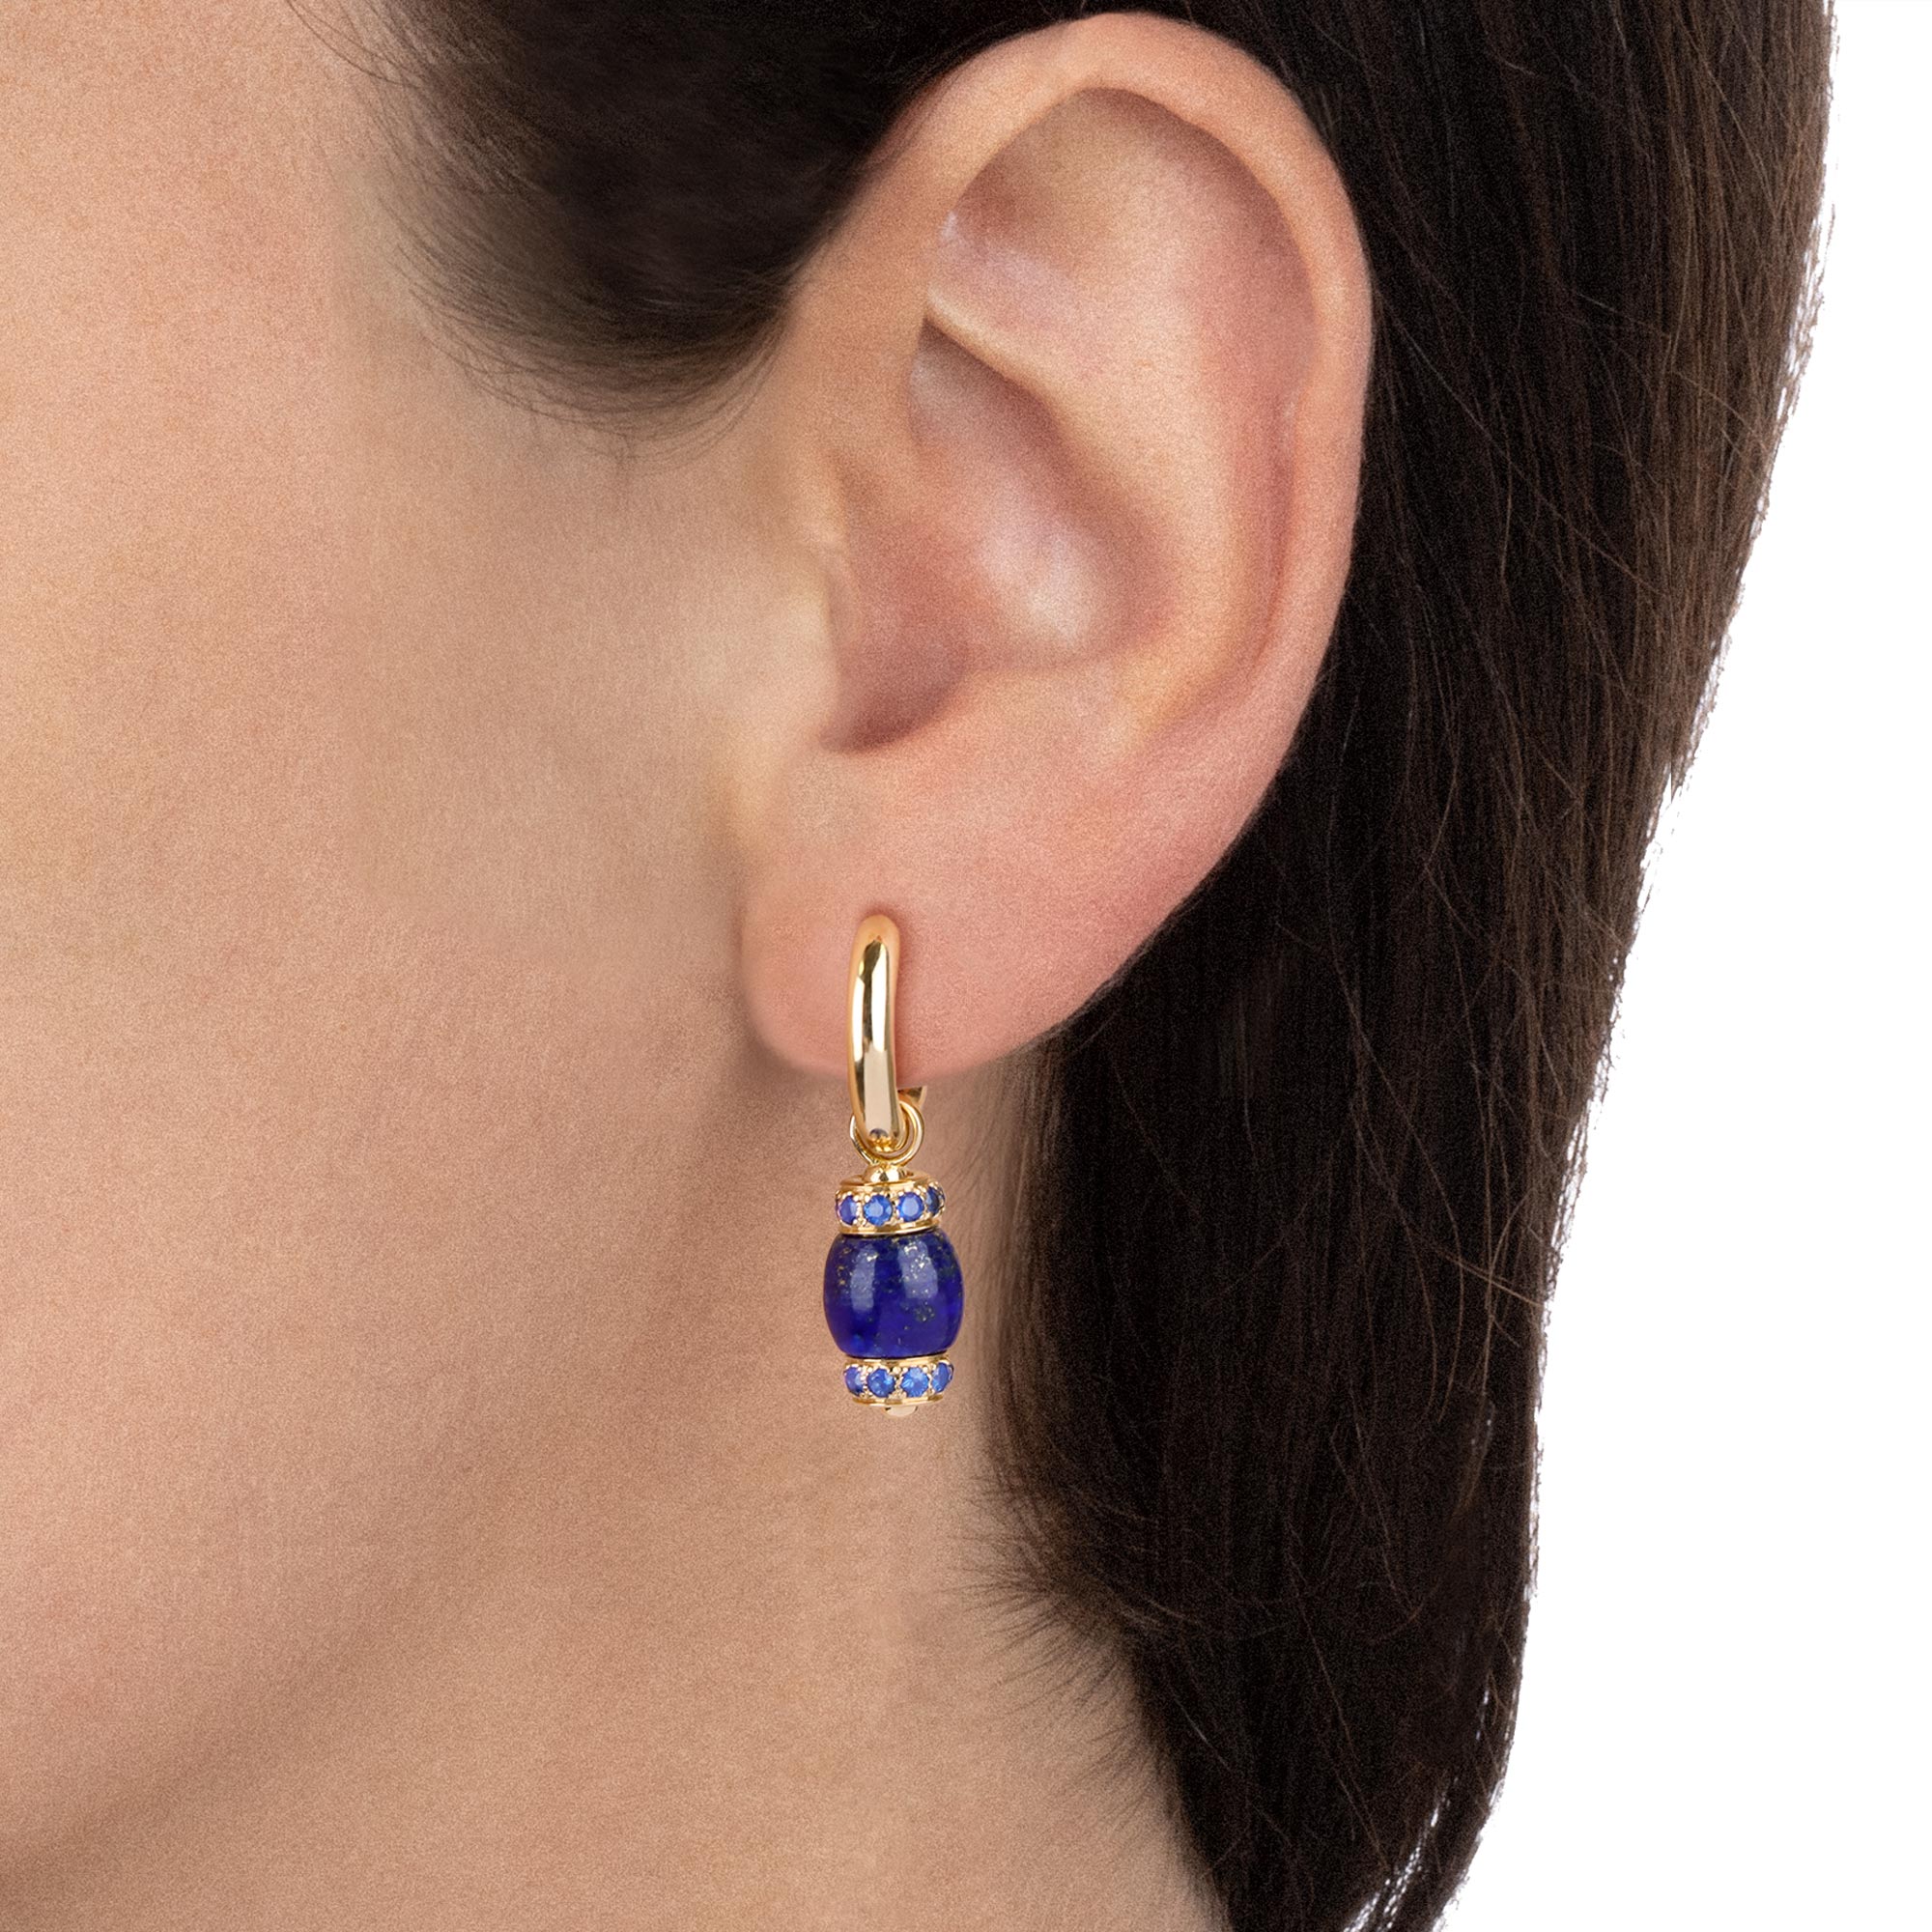 Worn - Le Carrousel Earrings Lapis lazuli and Light Blue Sapphires